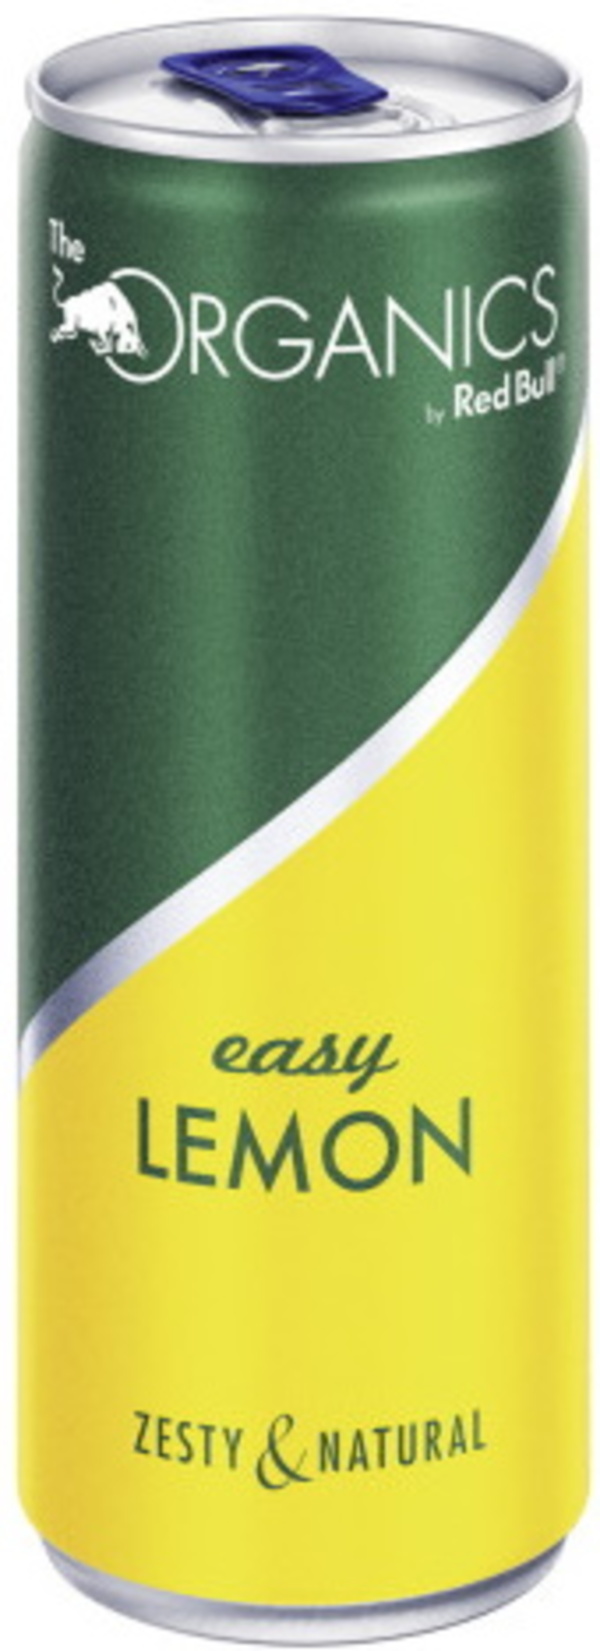 Bild 1 von Red Bull Bio Organics Easy Lemon 250ML